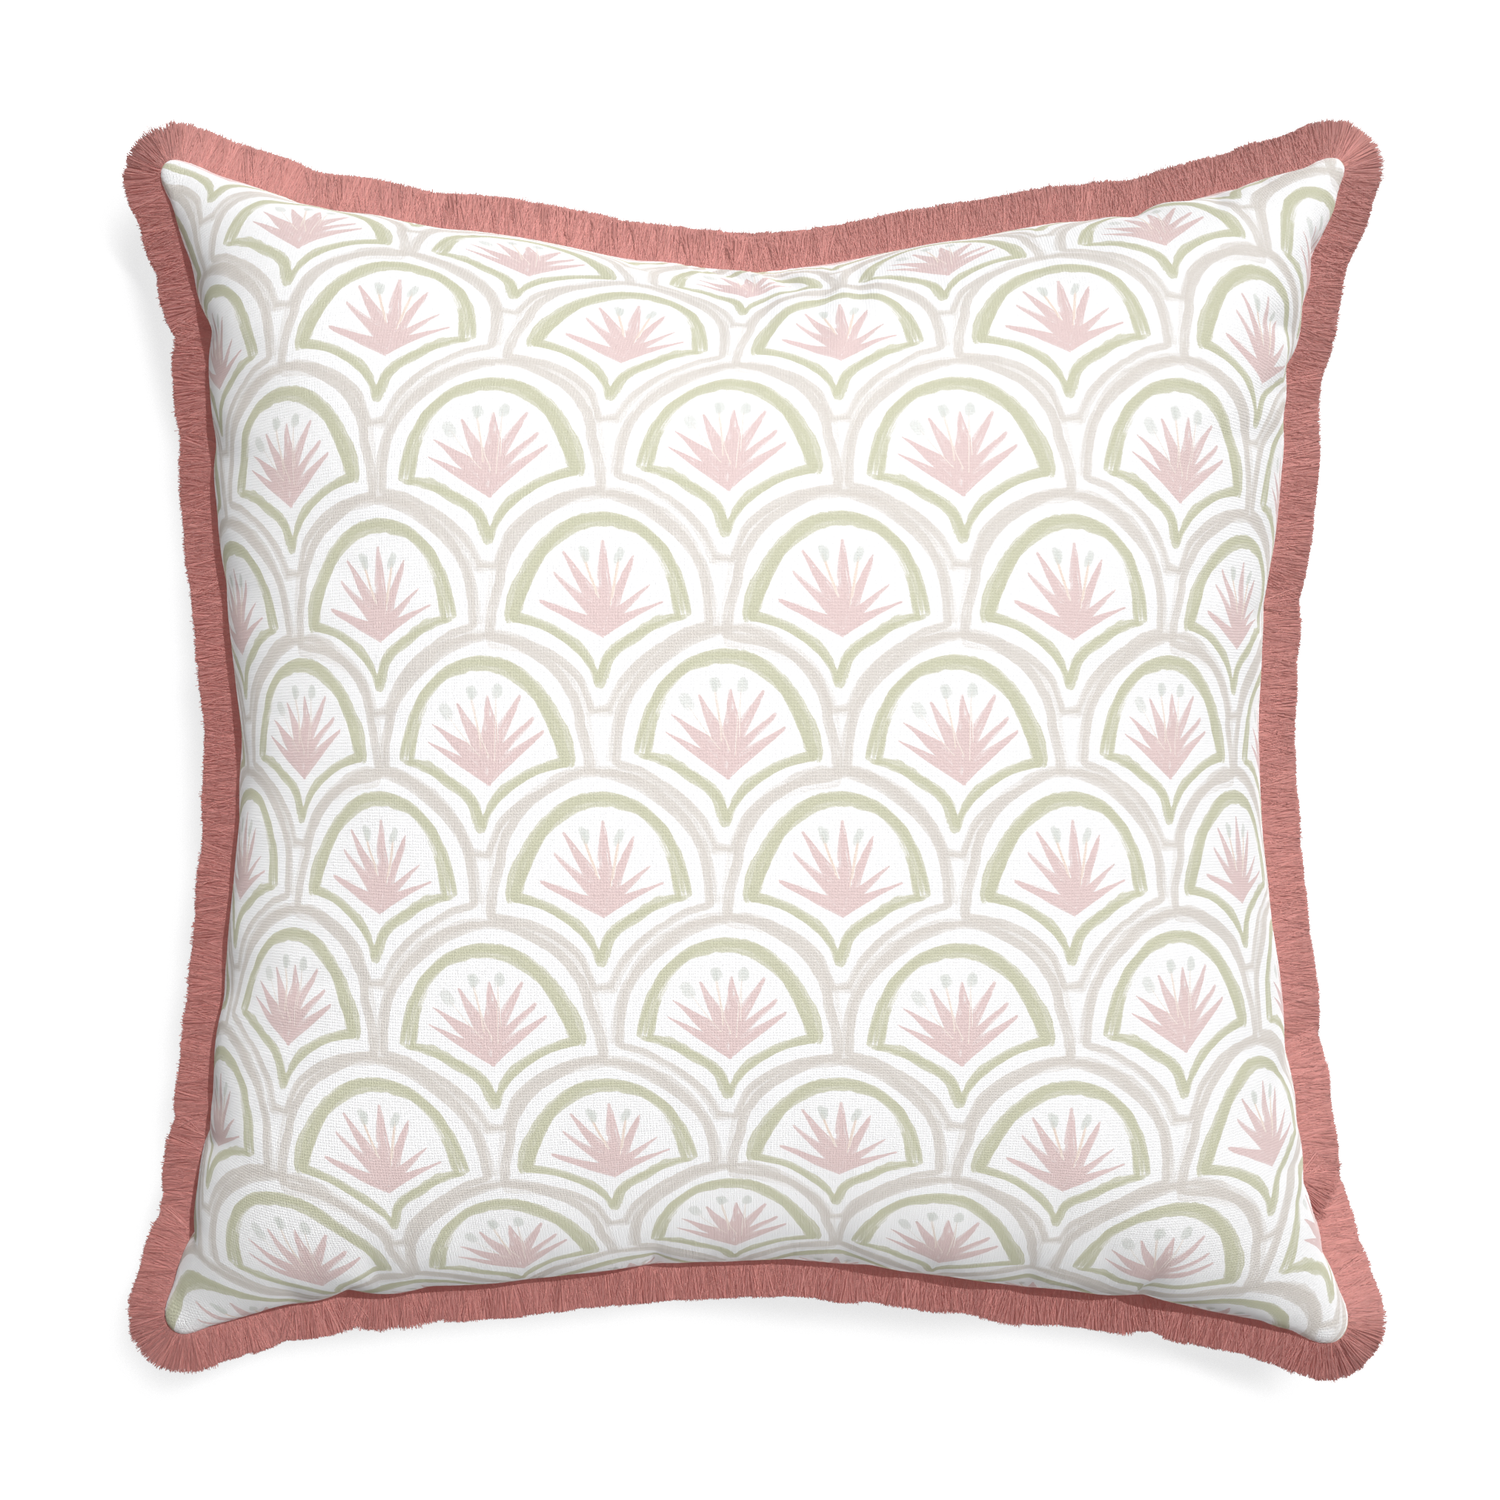 Euro-sham thatcher rose custom pillow with d fringe on white background